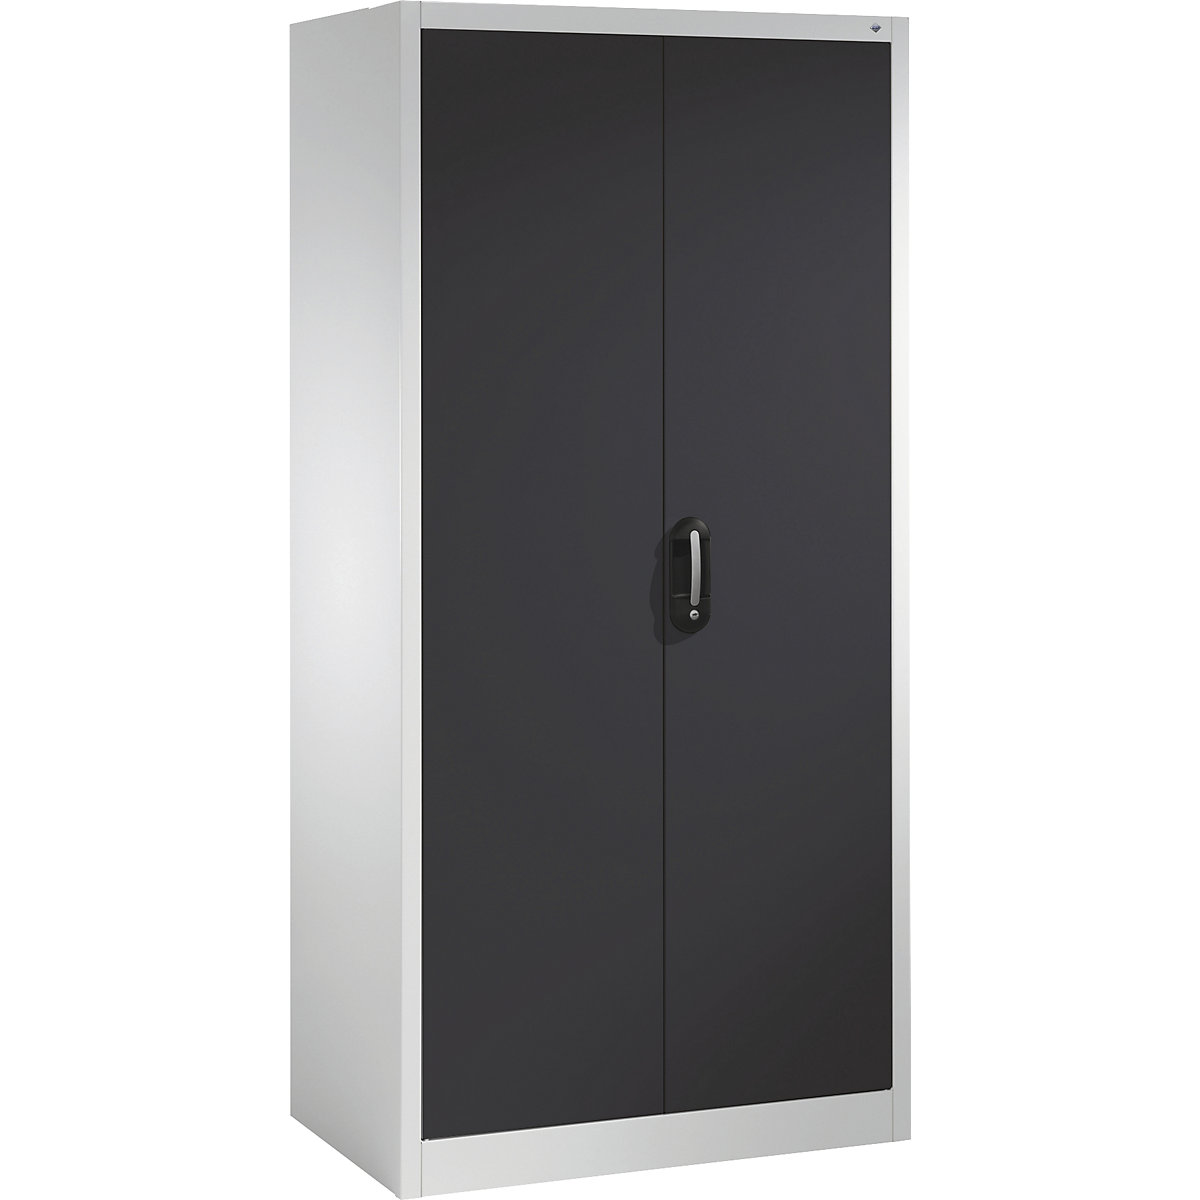 ACURADO universal cupboard – C+P, WxD 930 x 600 mm, light grey / black grey-30